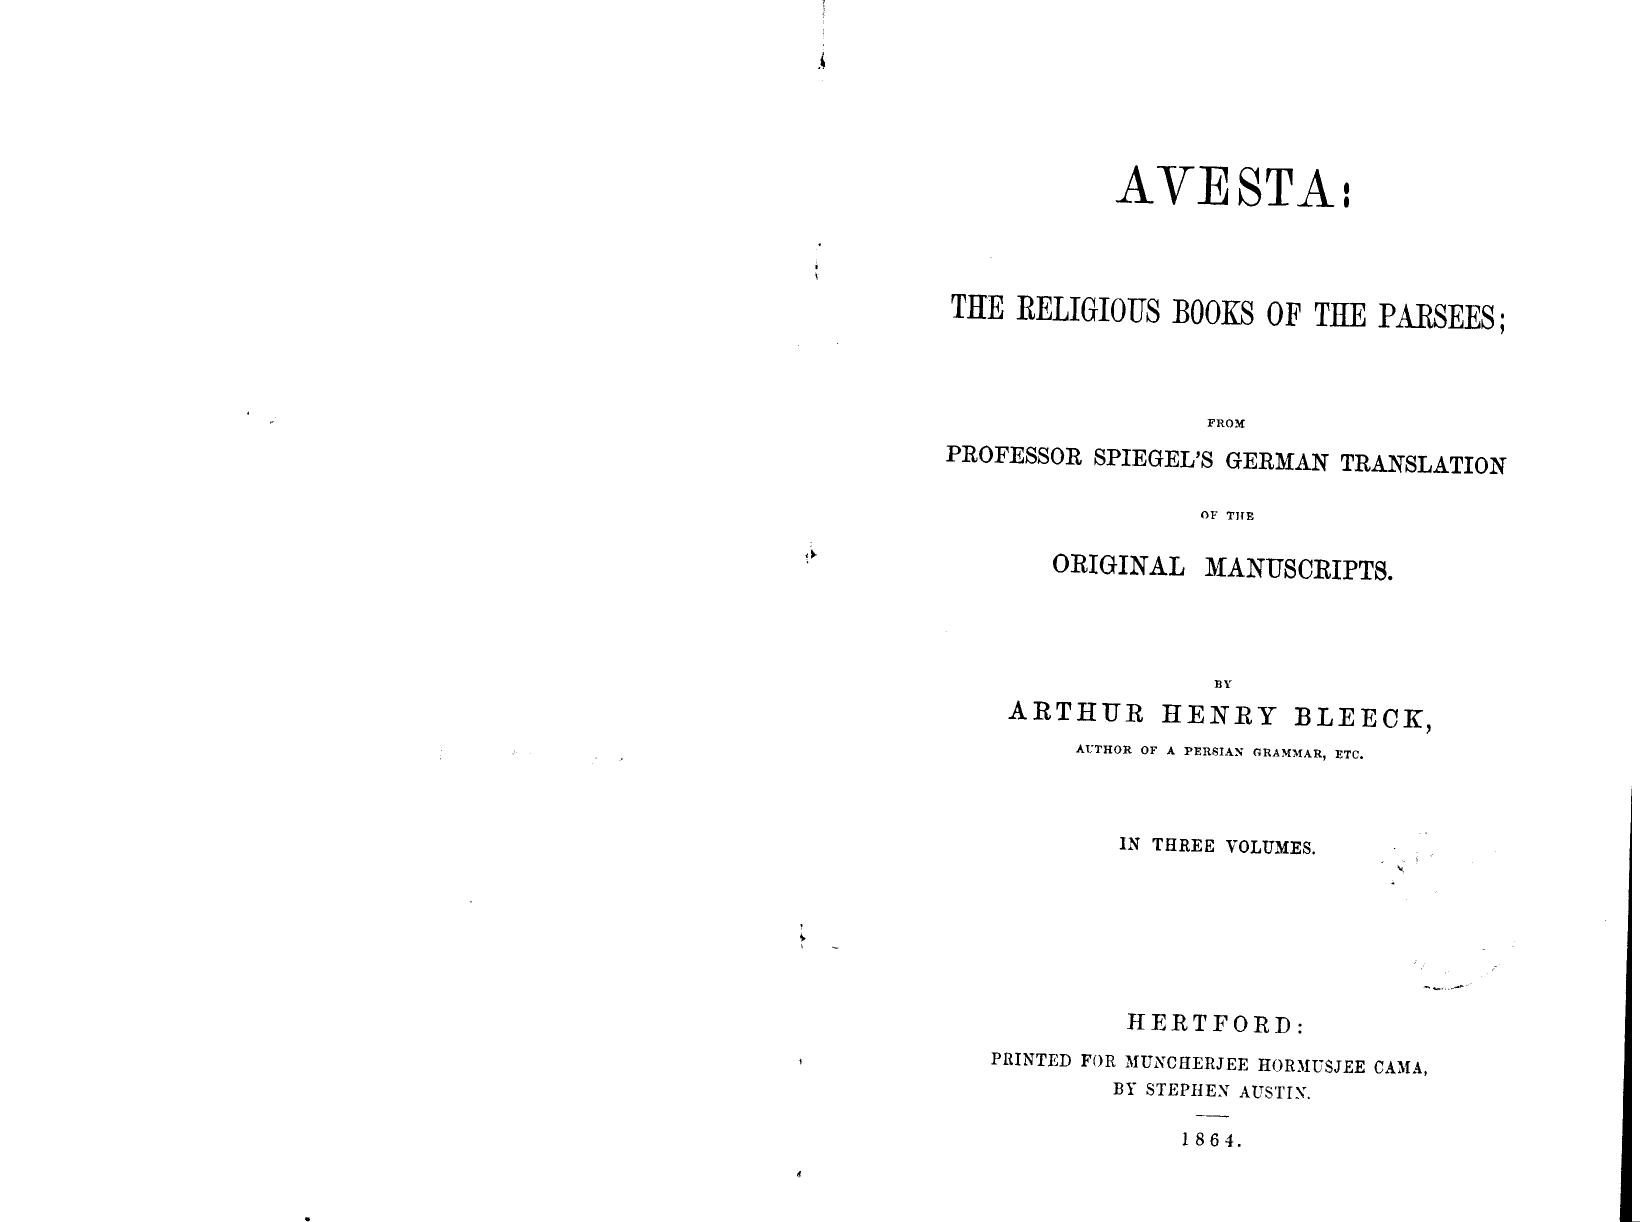 BY Arthur Henry Bleeck - Avesta by 1864